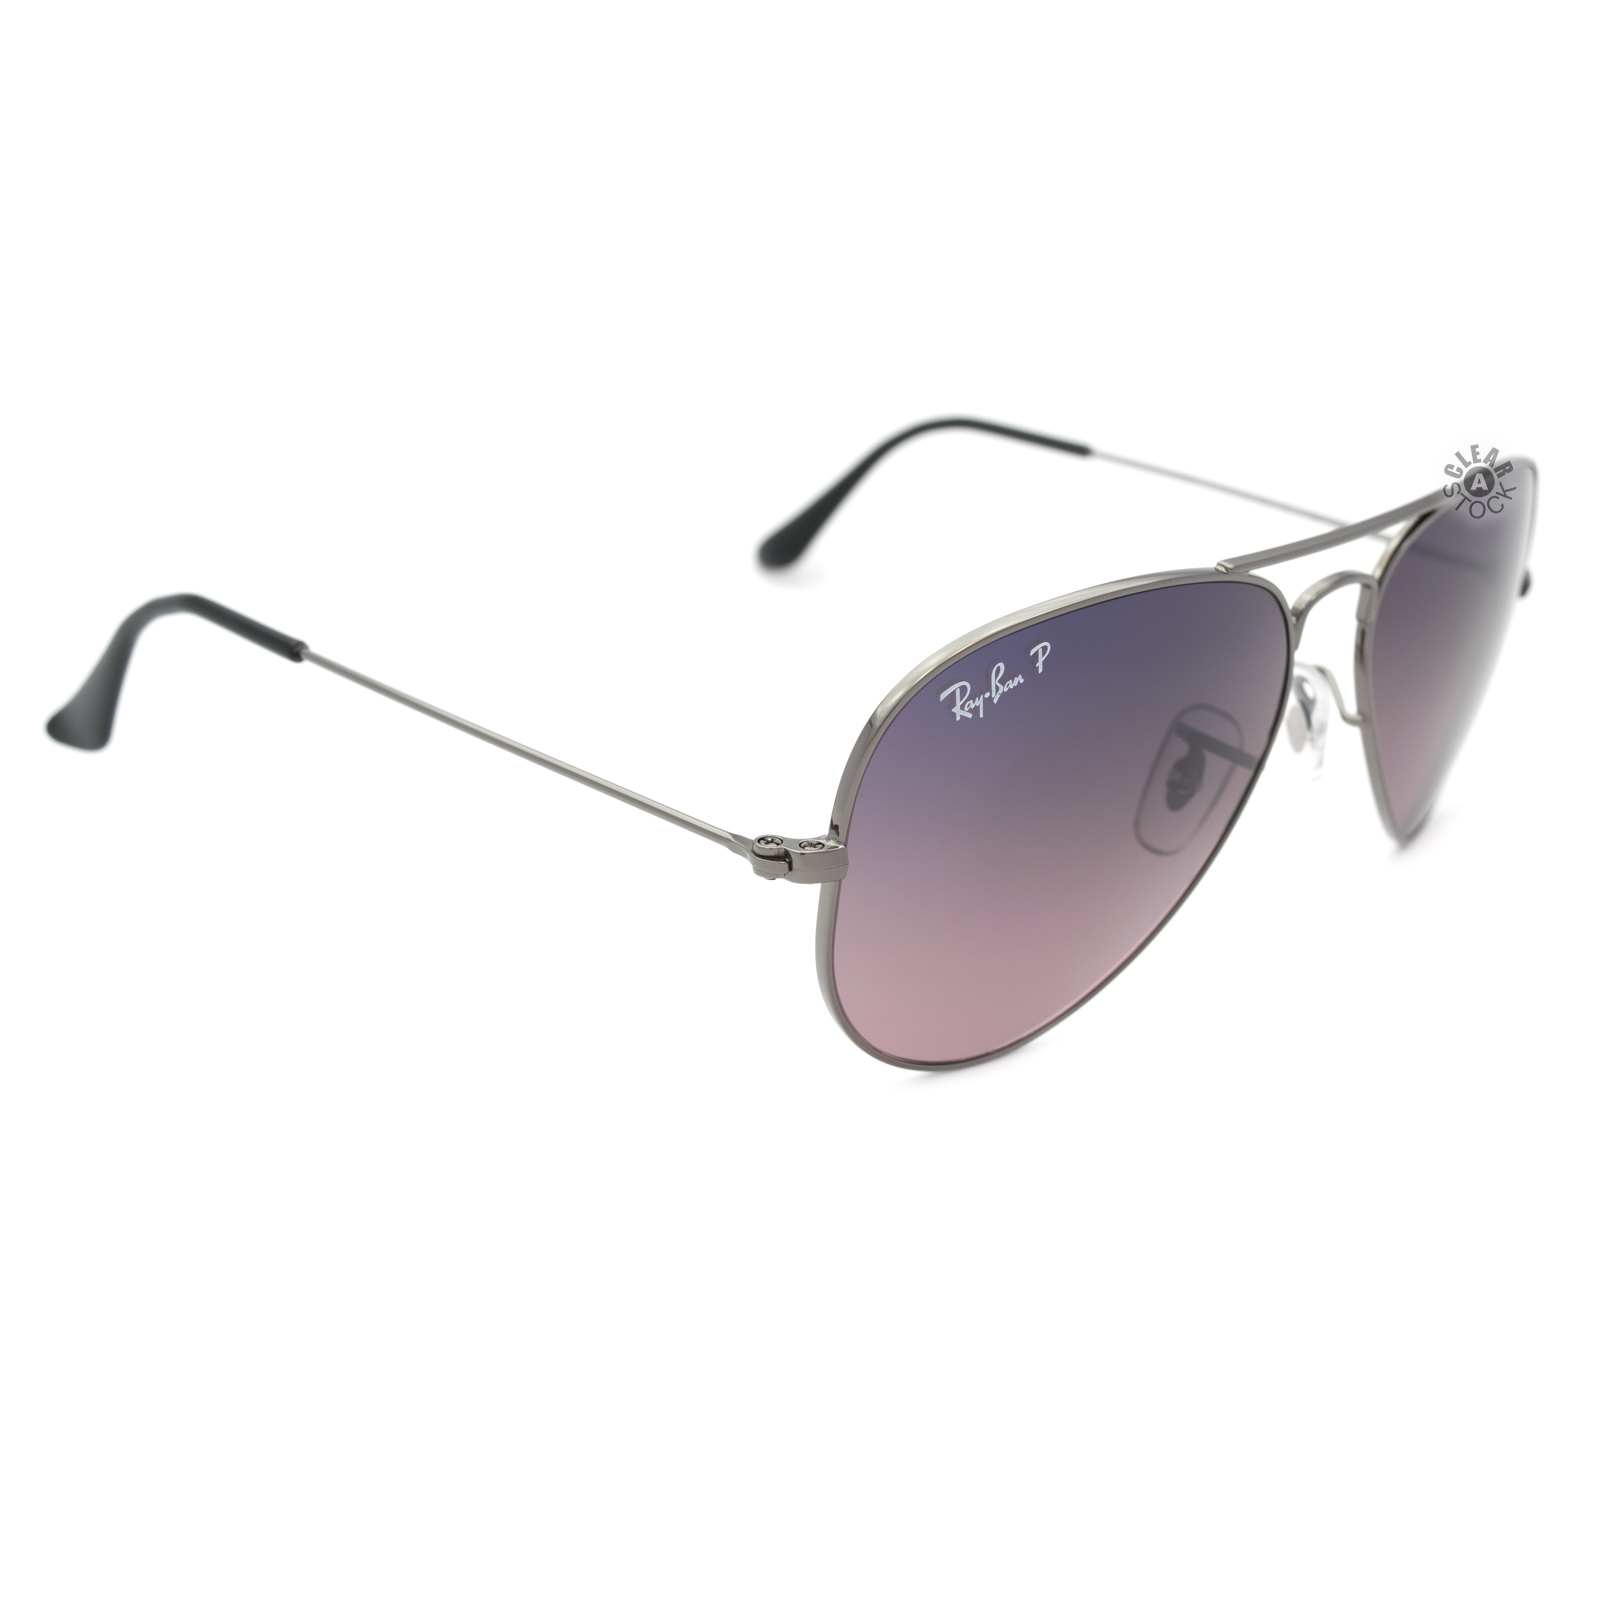 Ray Ban Rb3025 004 77 Aviator Polarized Sunglasses Gunmetal Blue Pink Gradient 55mm Usa